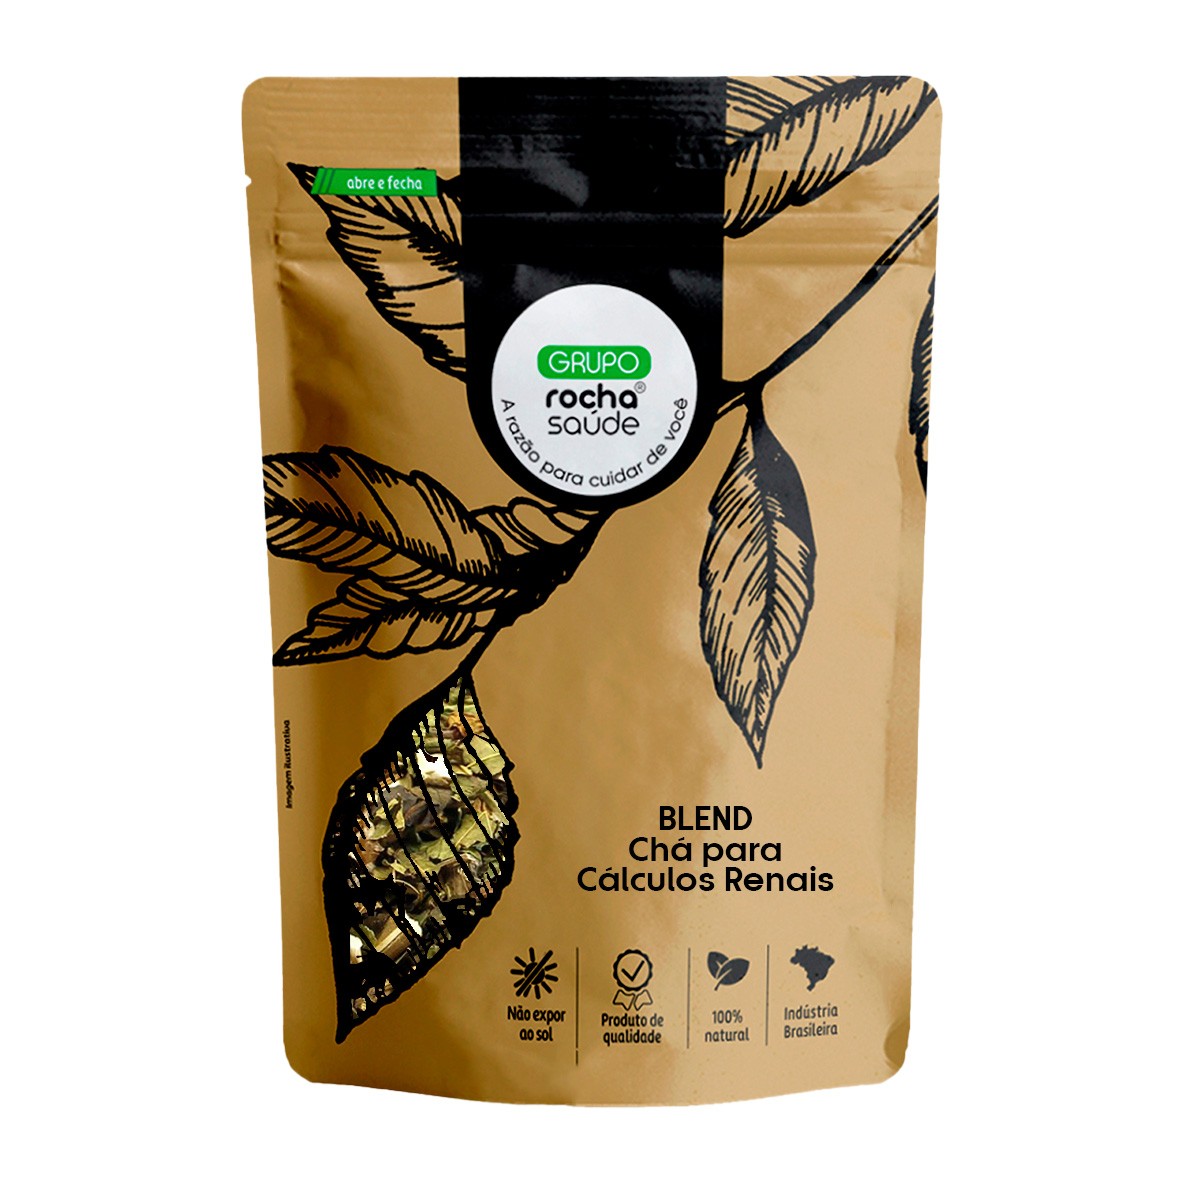 Blend – Chá para Cálculos Renais - 100% Natural - Alta Qualidade